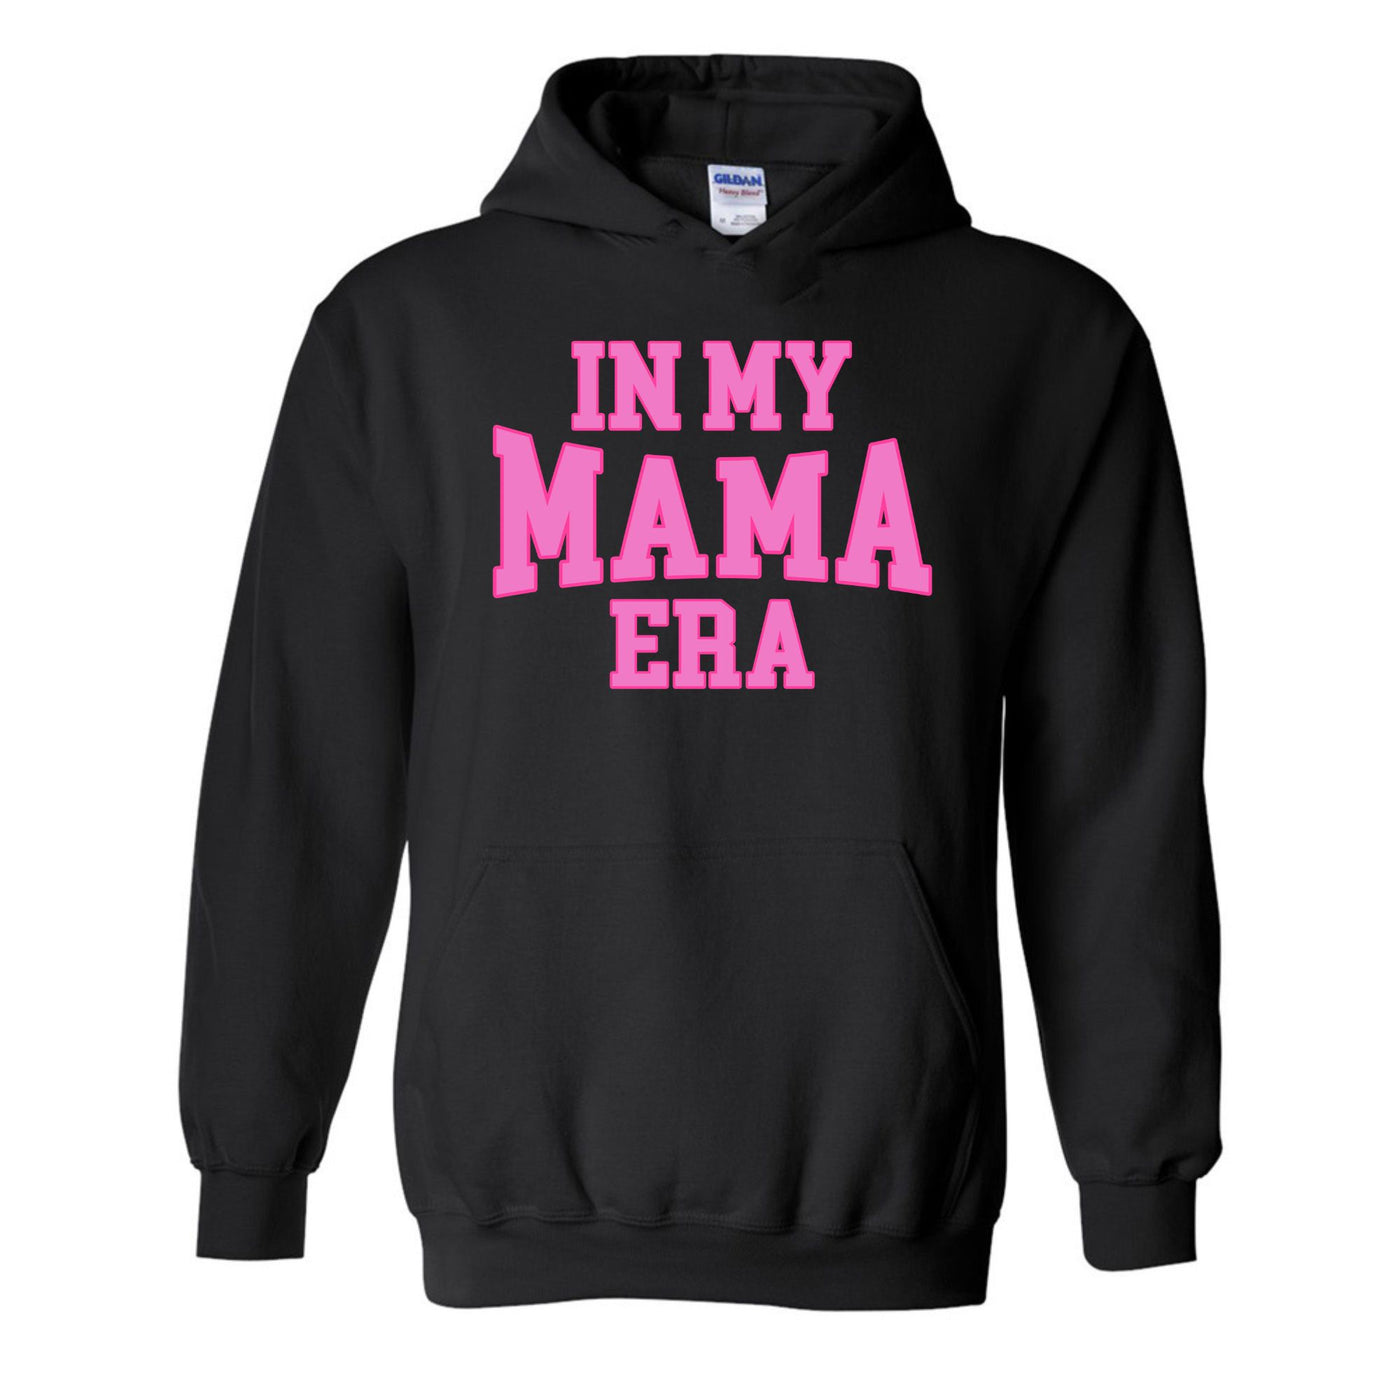 'In My Mama Era' Hoodie